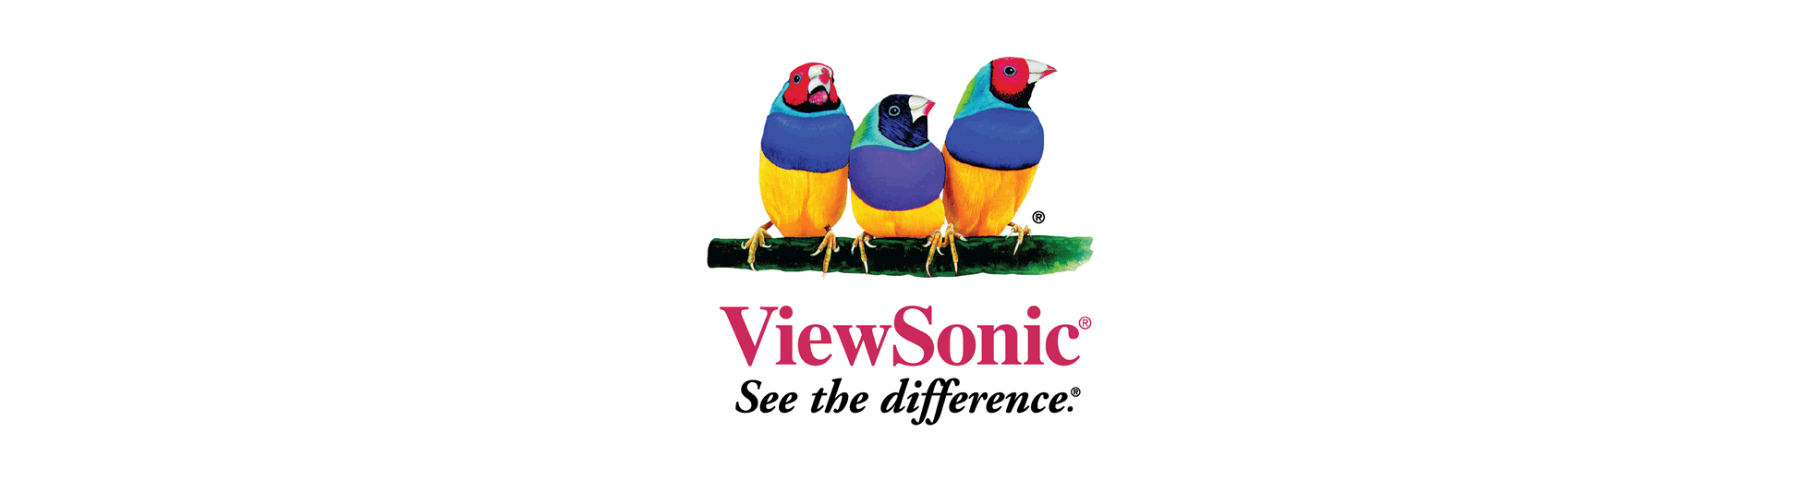 Viewsonic logo - Media Service België